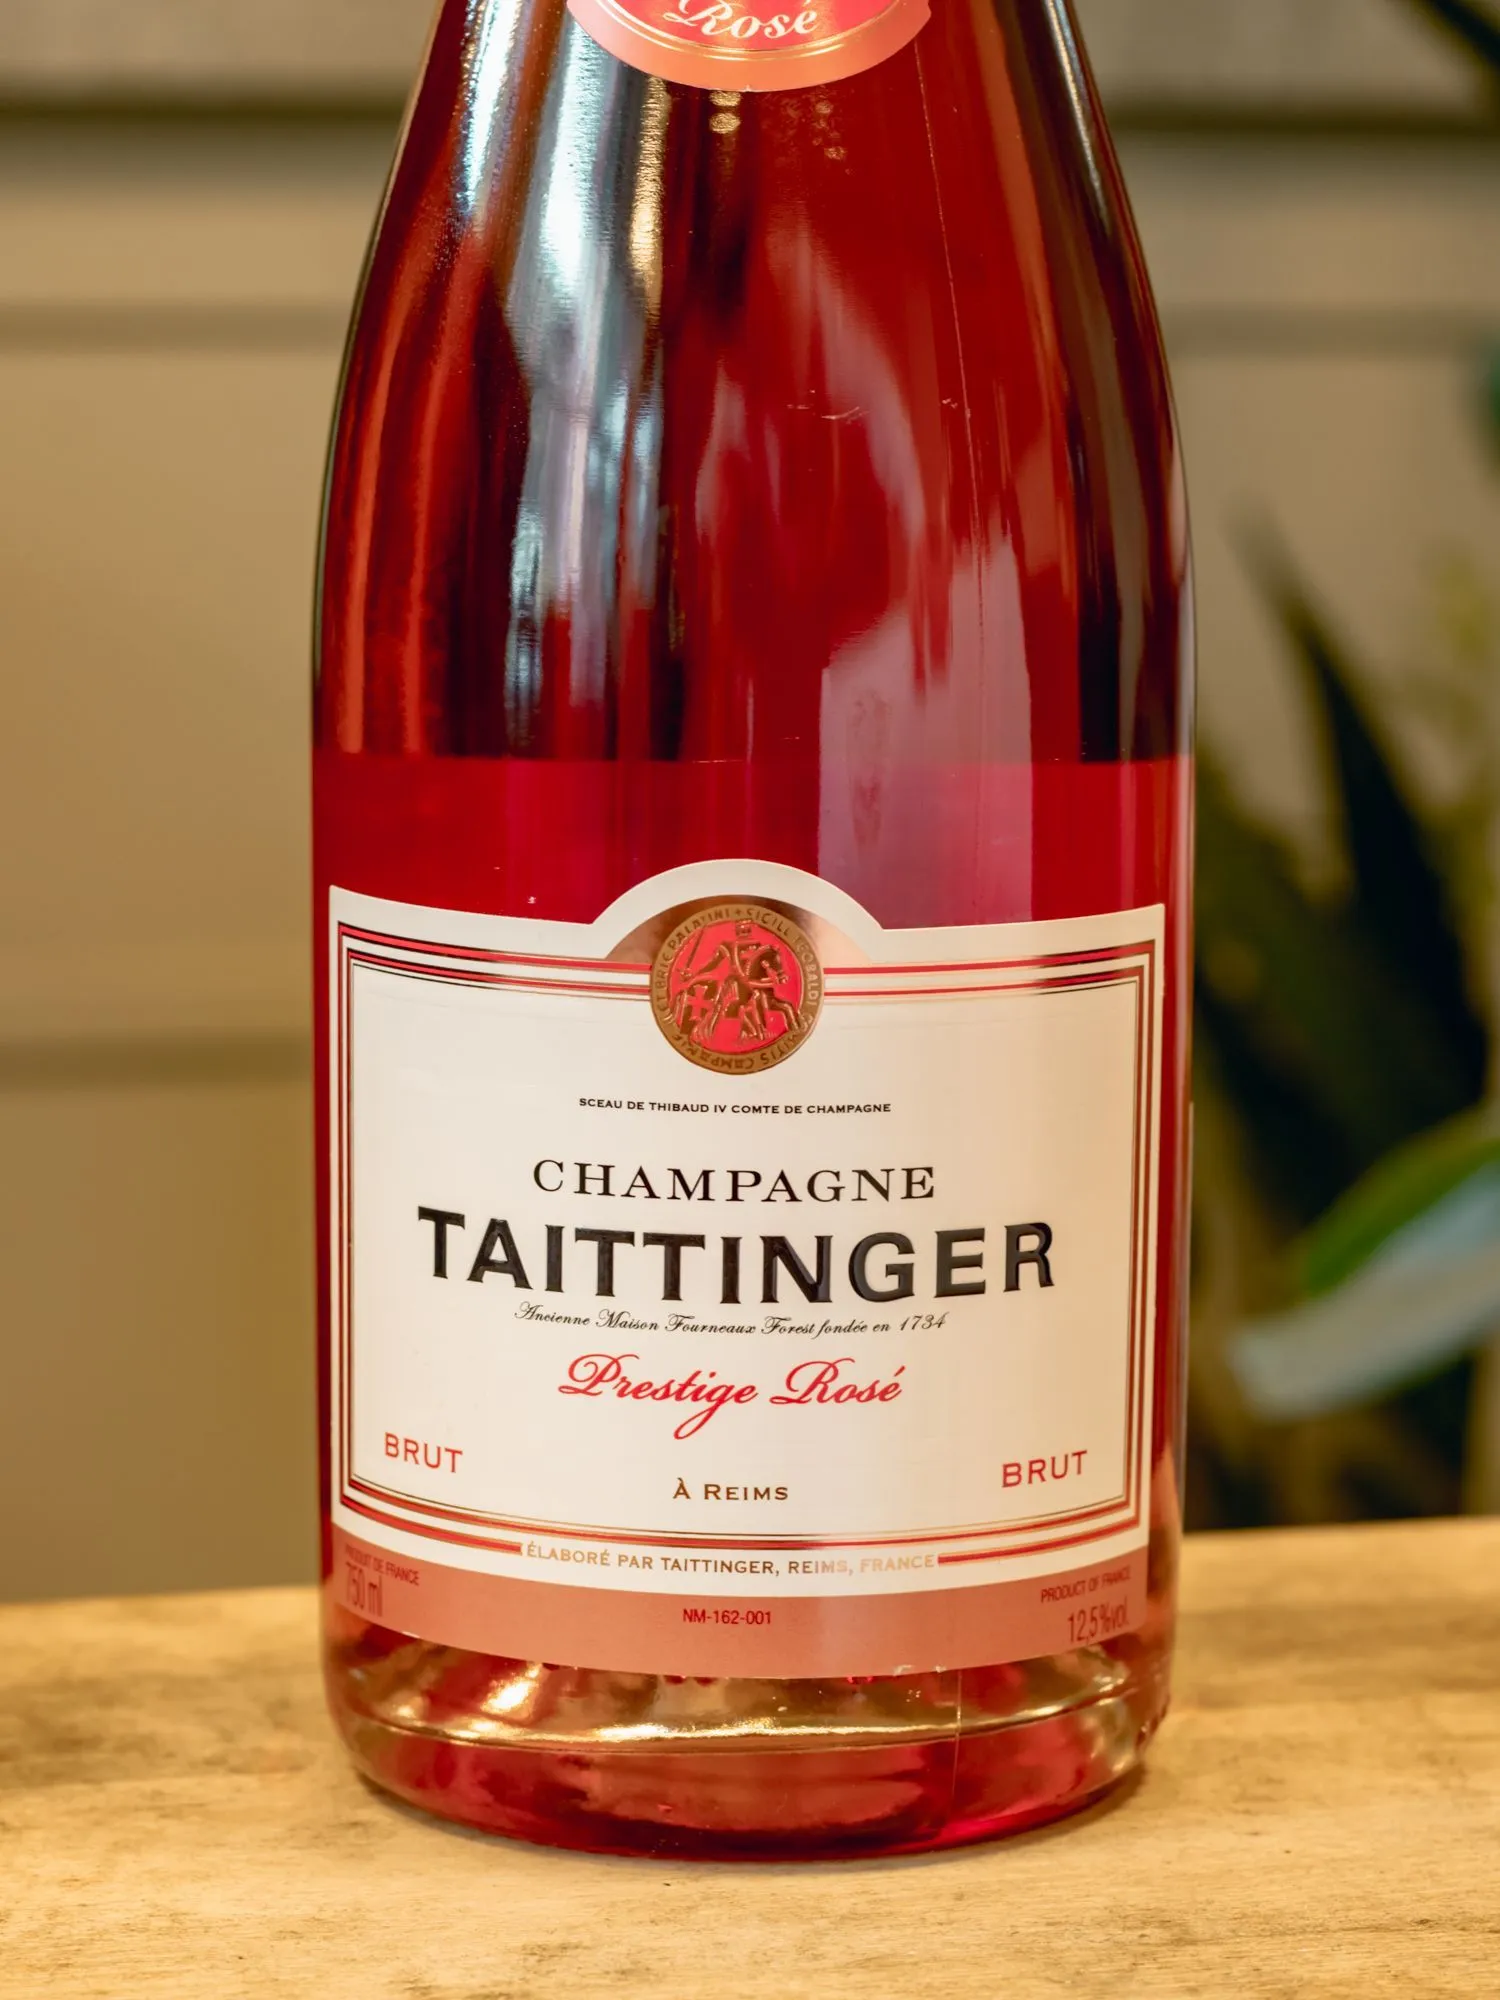 Шампанское Taittinger Prestige Rose Brut / Тэтэнжэ Престиж Розе Брют